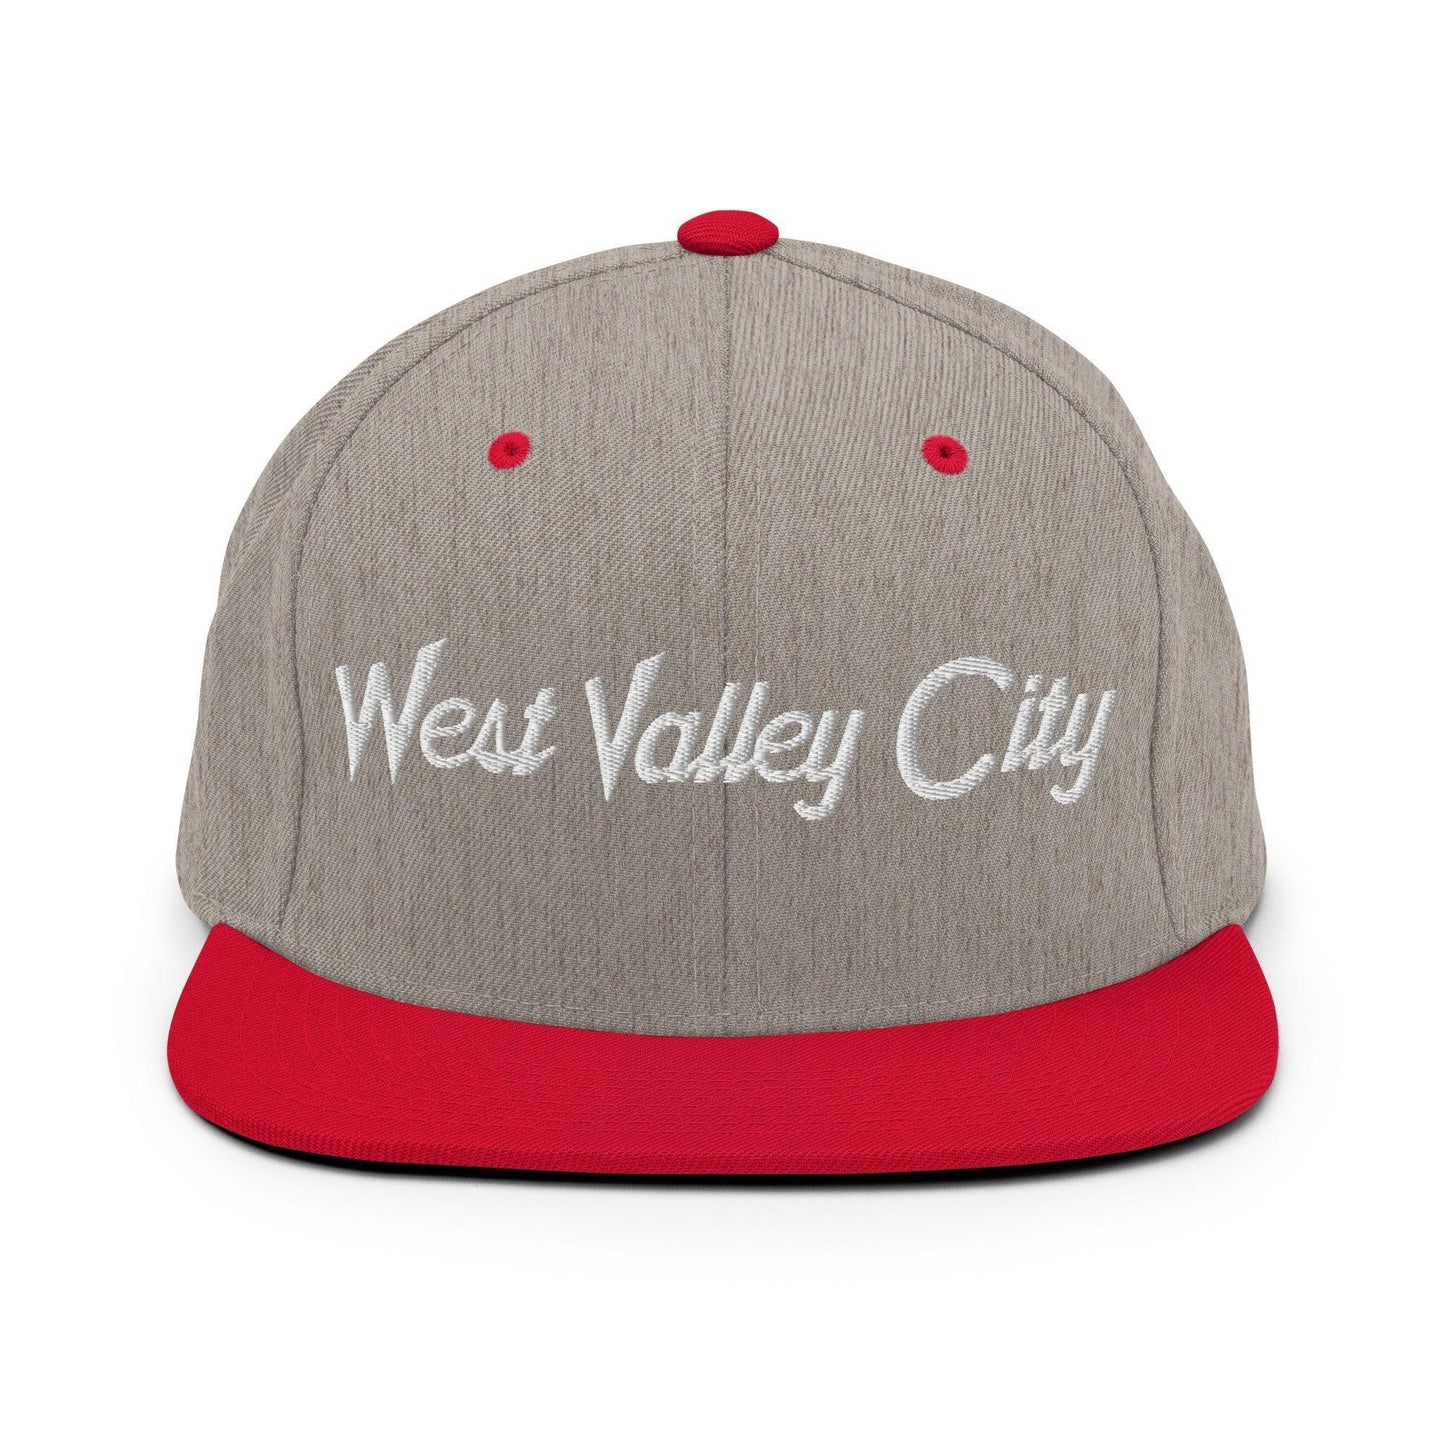 West Valley City Script Snapback Hat Heather Grey Red